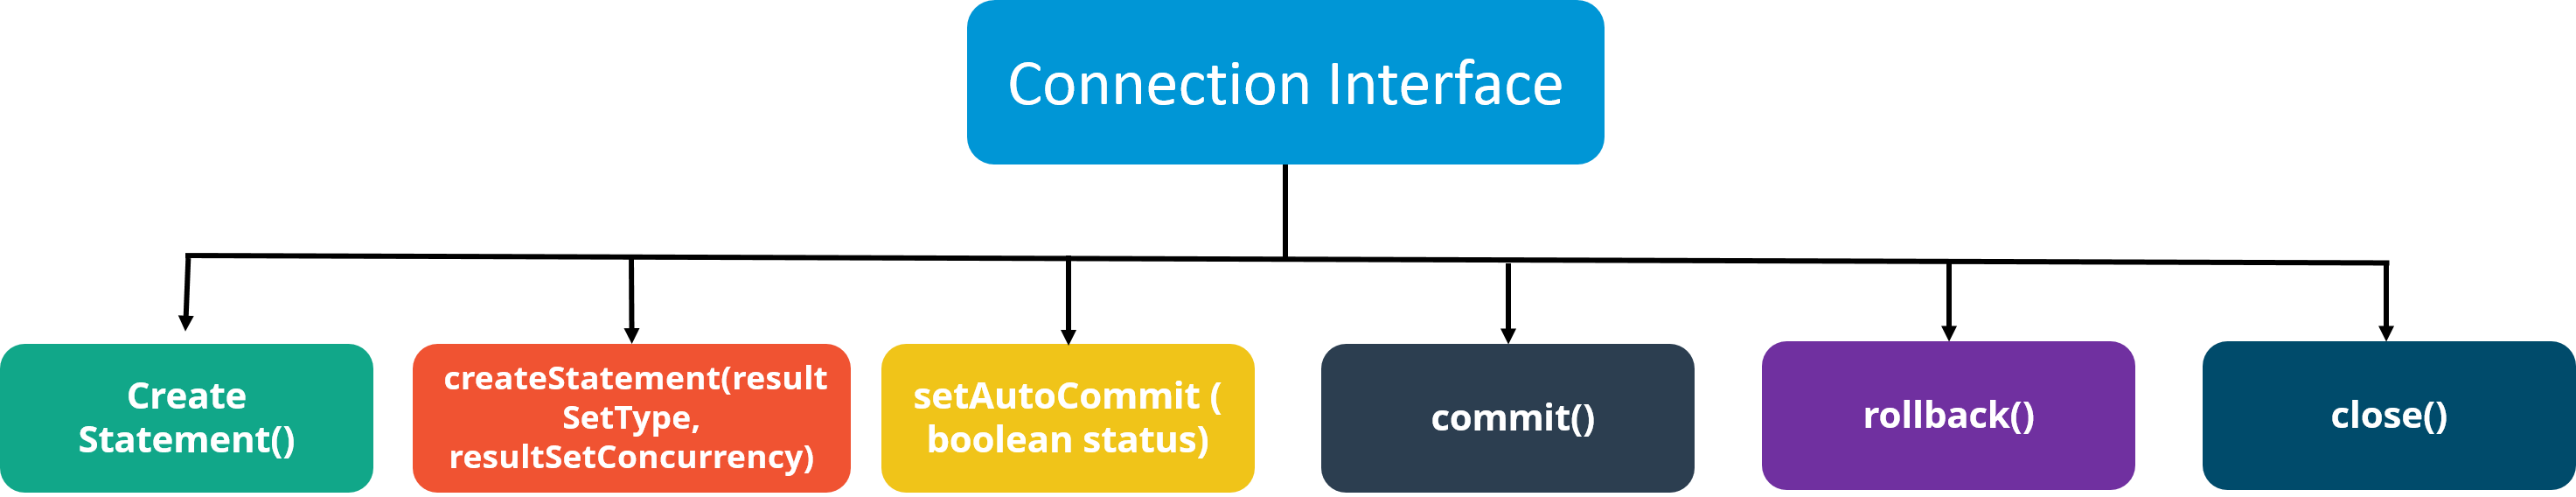 ConnectionInterface - Java Interview Questions - Edureka